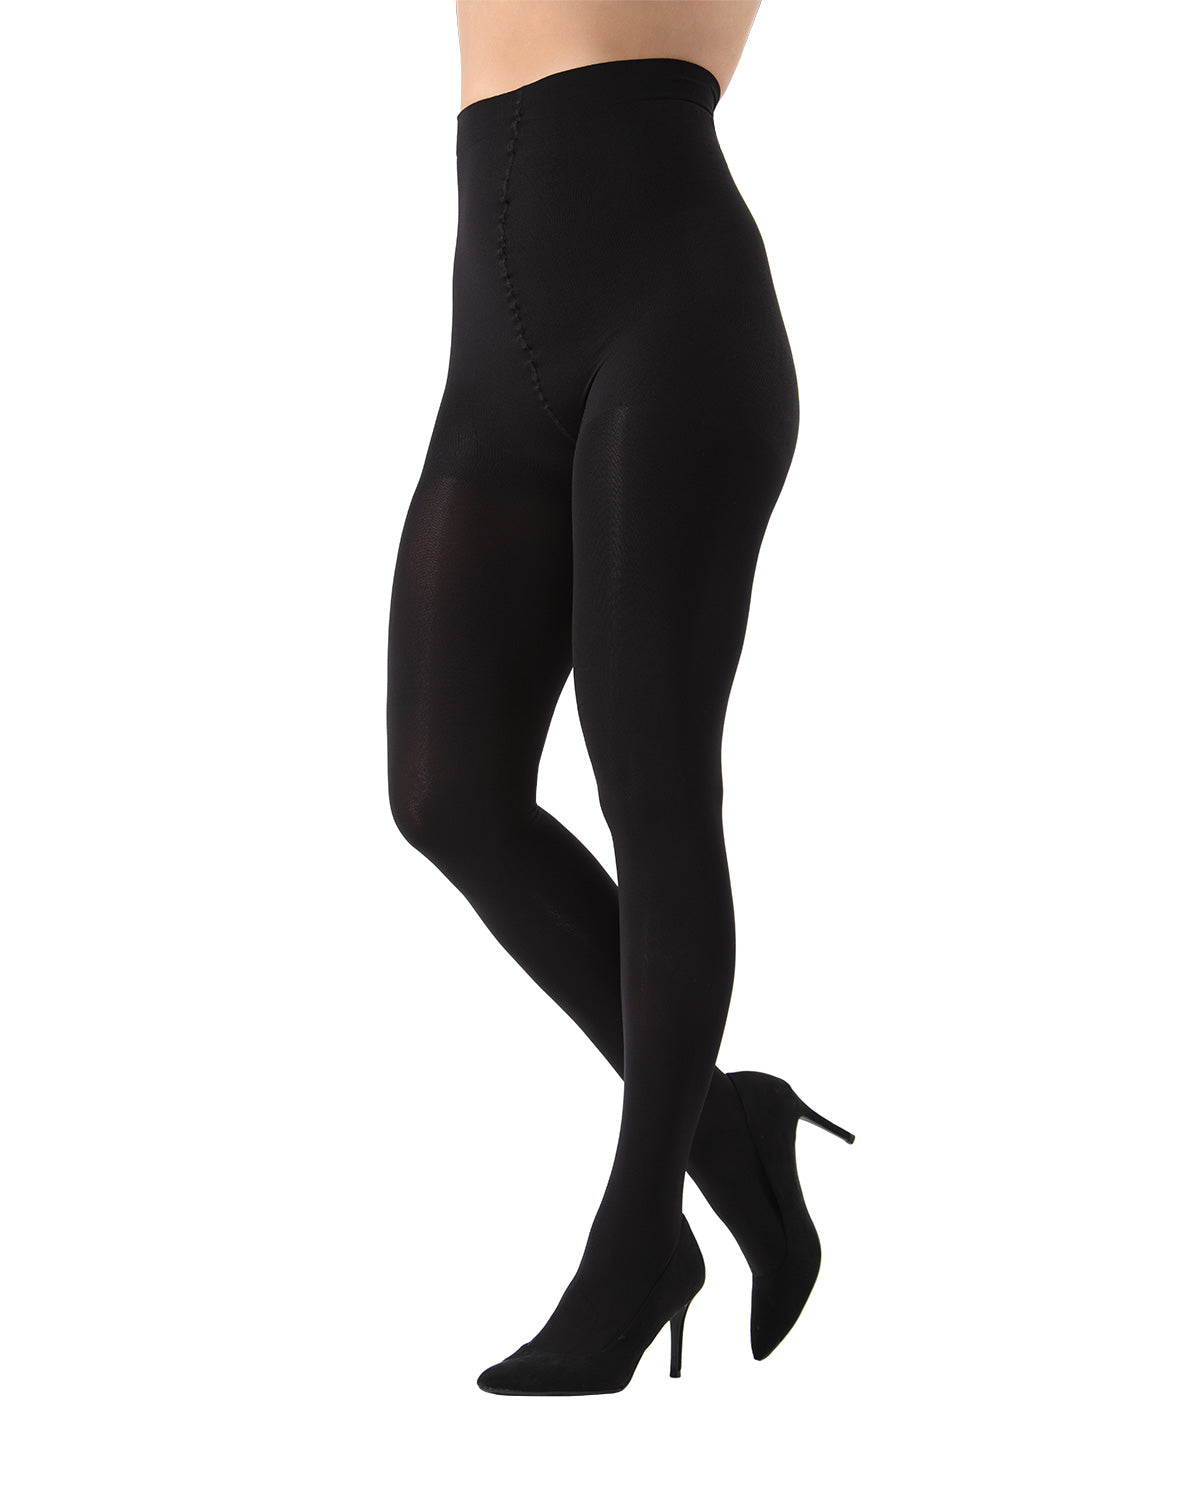 MeMoi 90 Denier Control Top Footless Tights Black Small/Medium at   Women's Clothing store